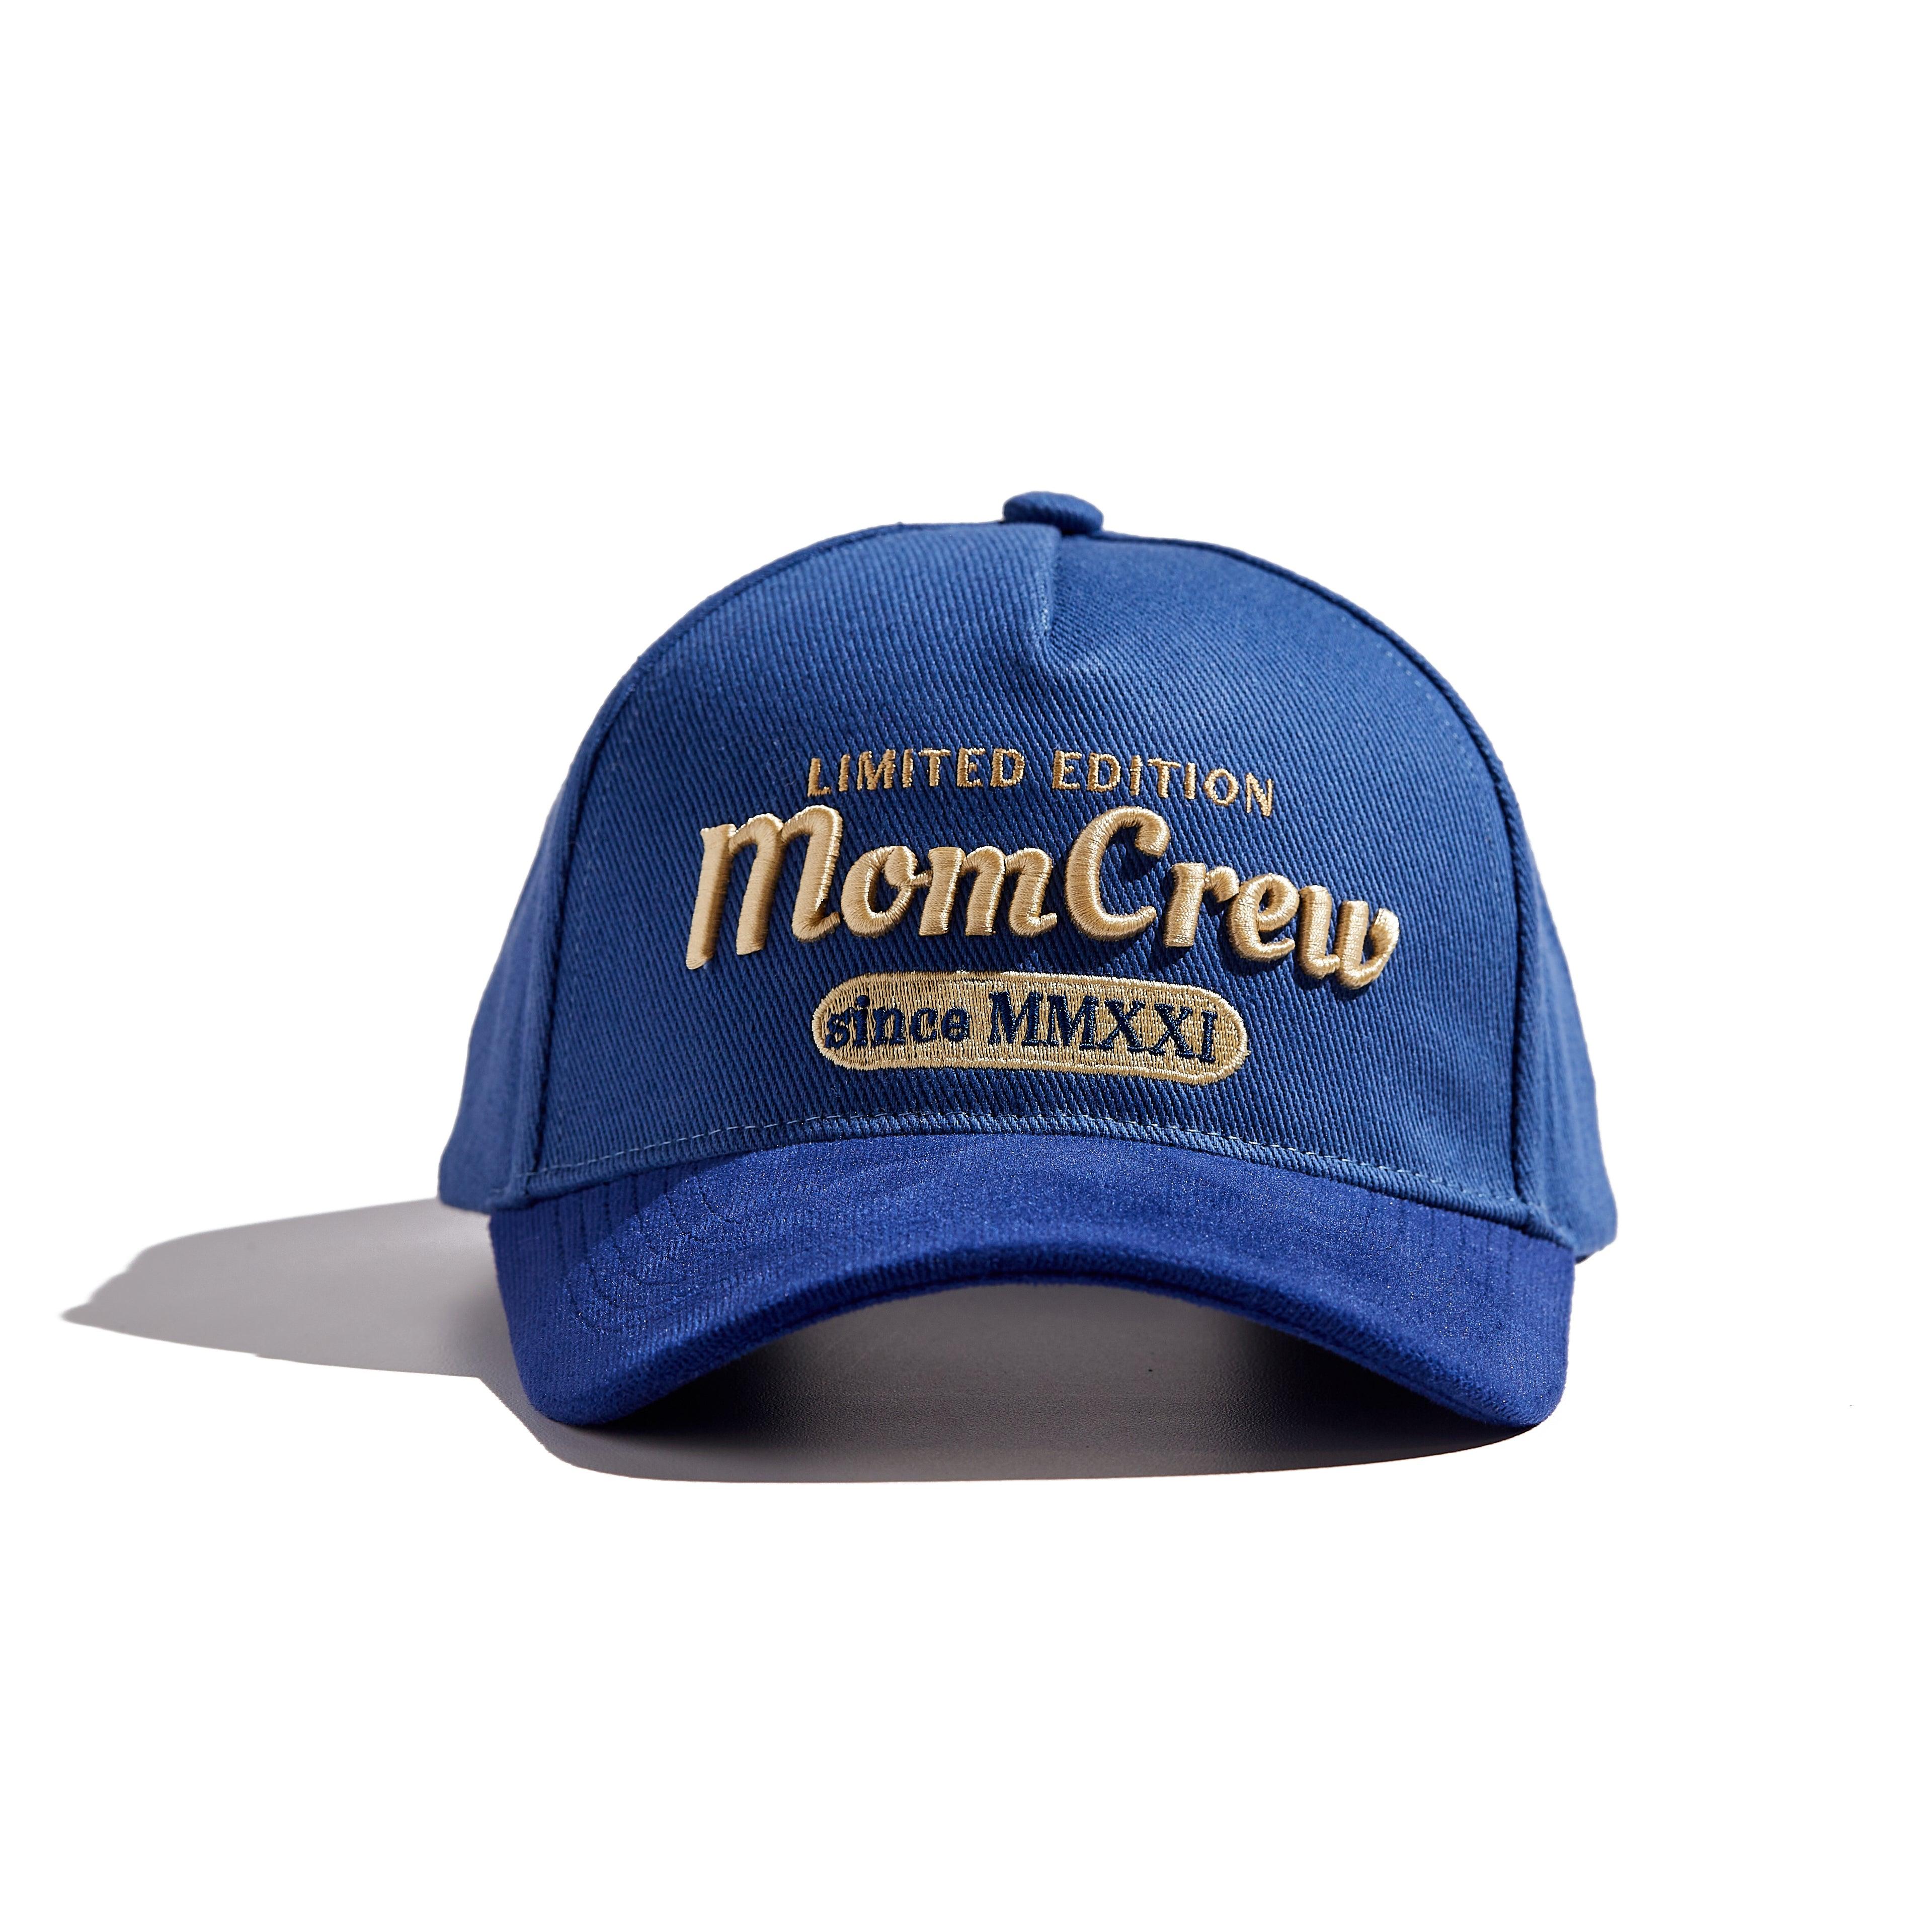 The 'MomCrew' Limited Edition Cap - Momcrew